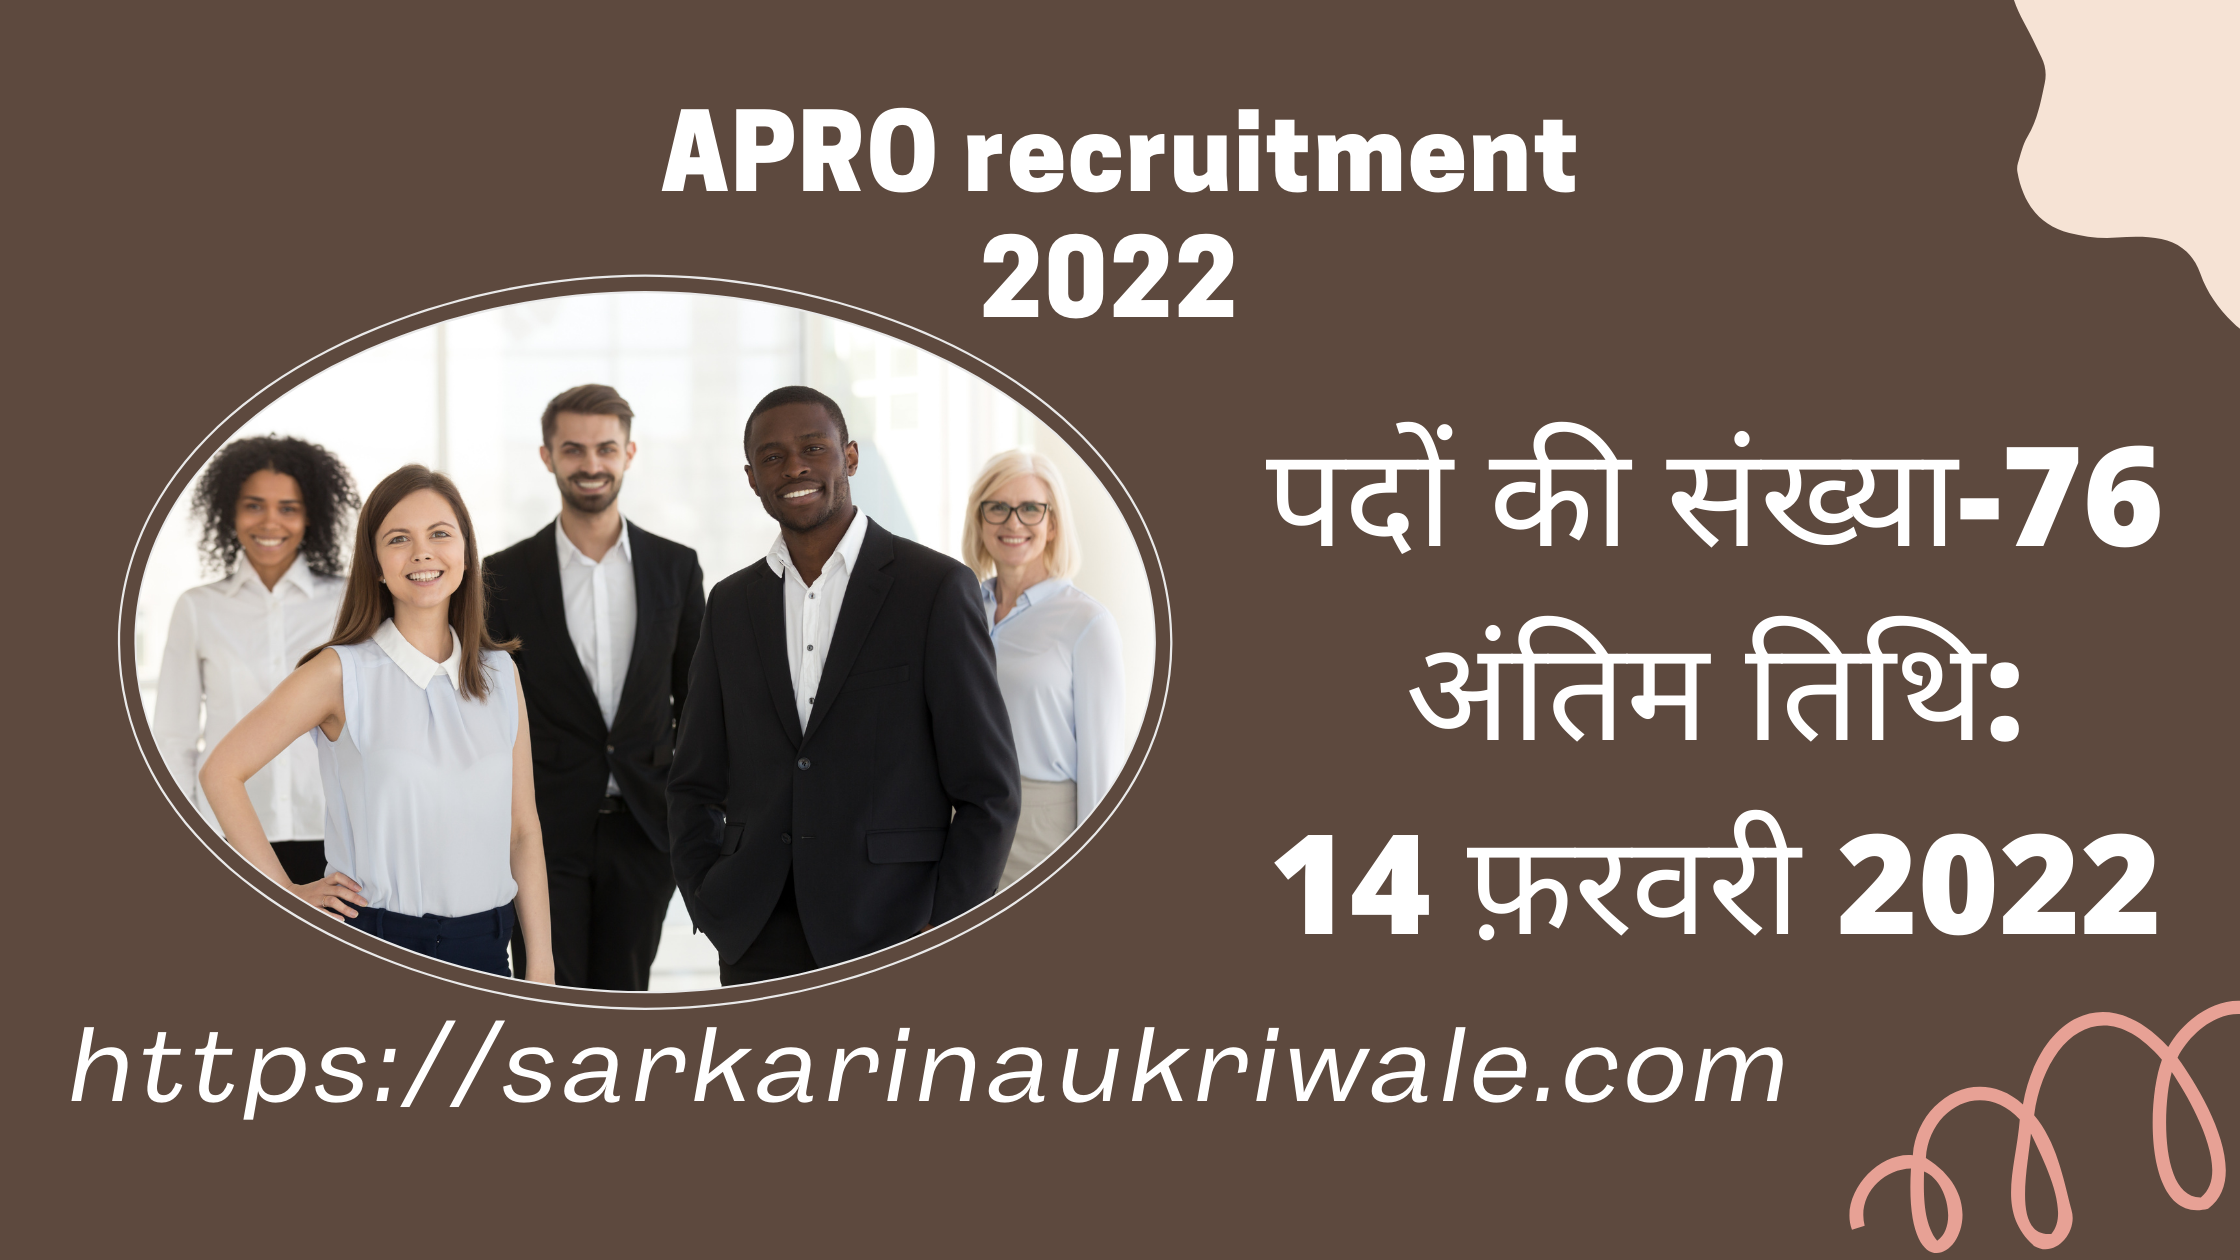 APRO recruitment 2022 राजस्थान सहायक जन सम्पर्क अधिकारी भर्ती